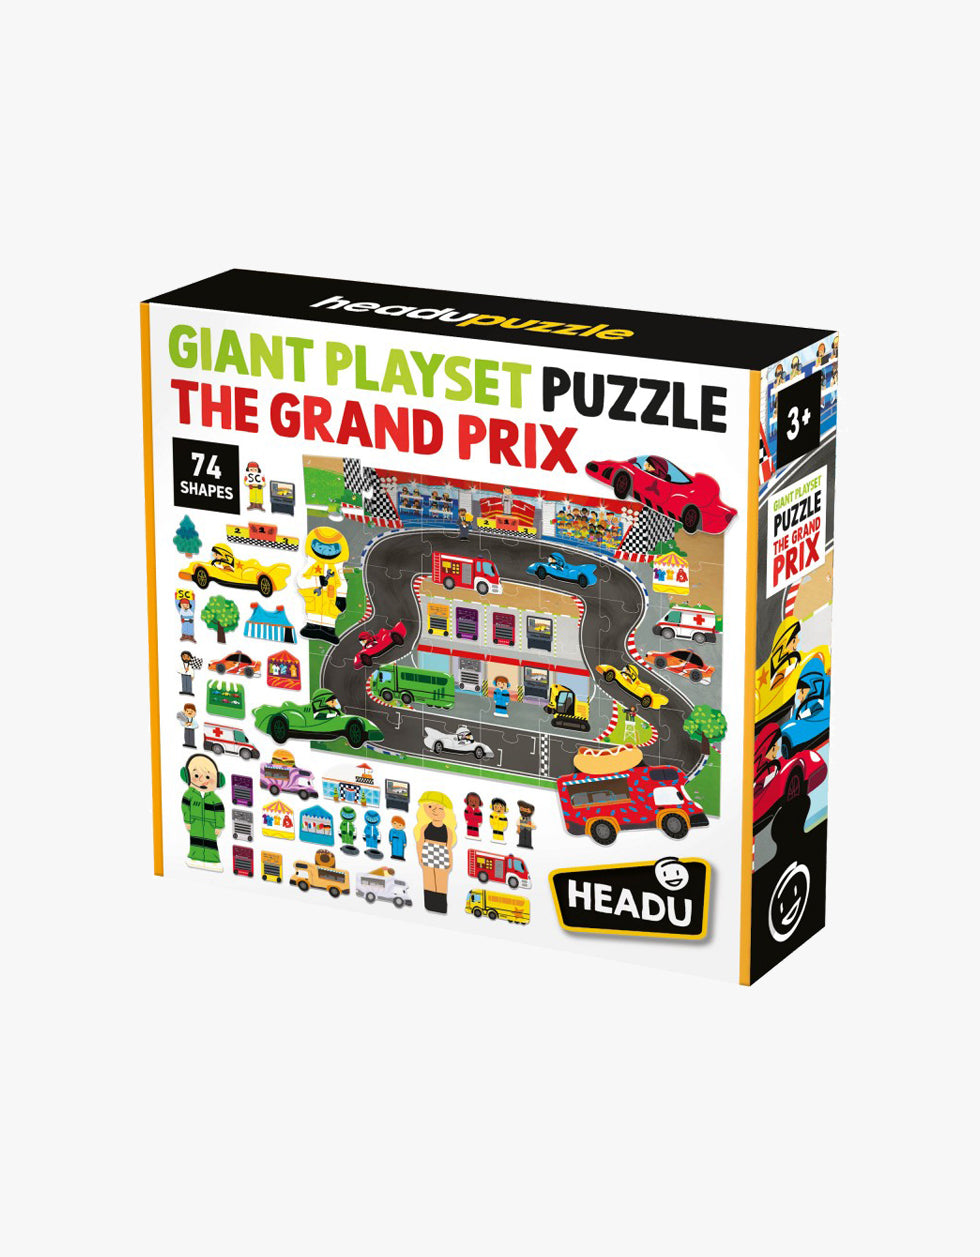 Giant puzzle